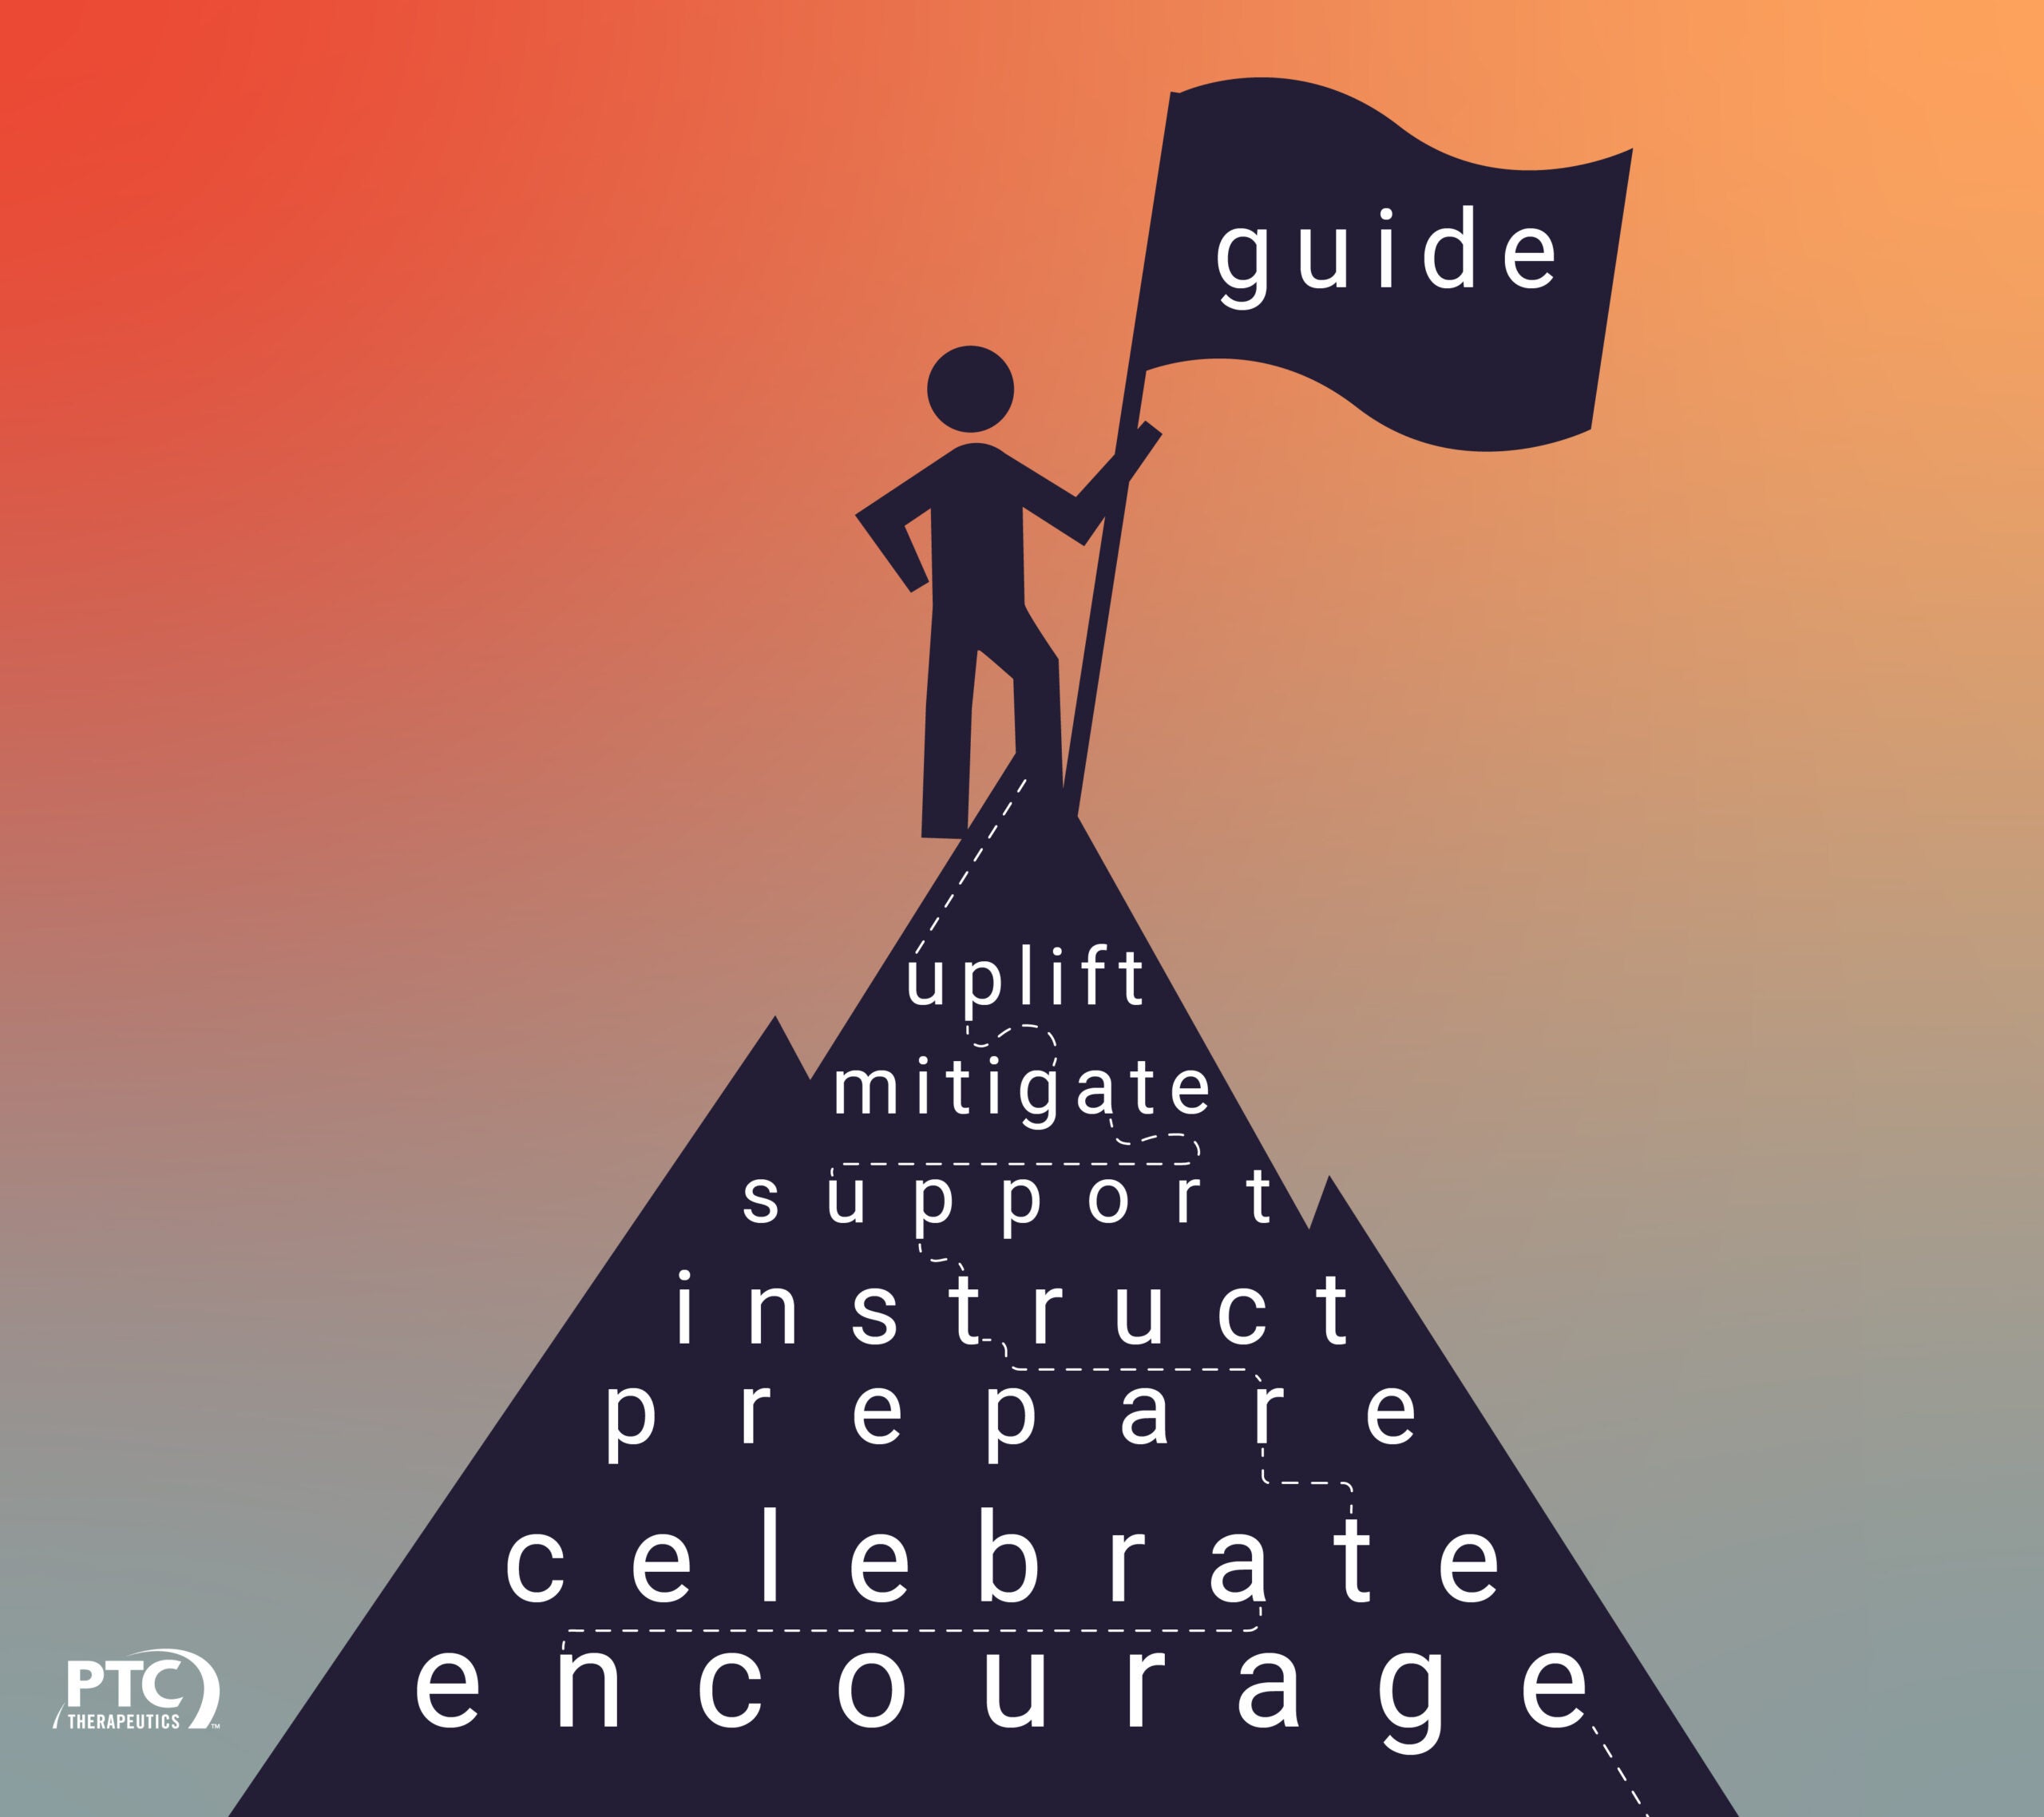 guide uplift mitigate support instruct prepare celebrate encourage